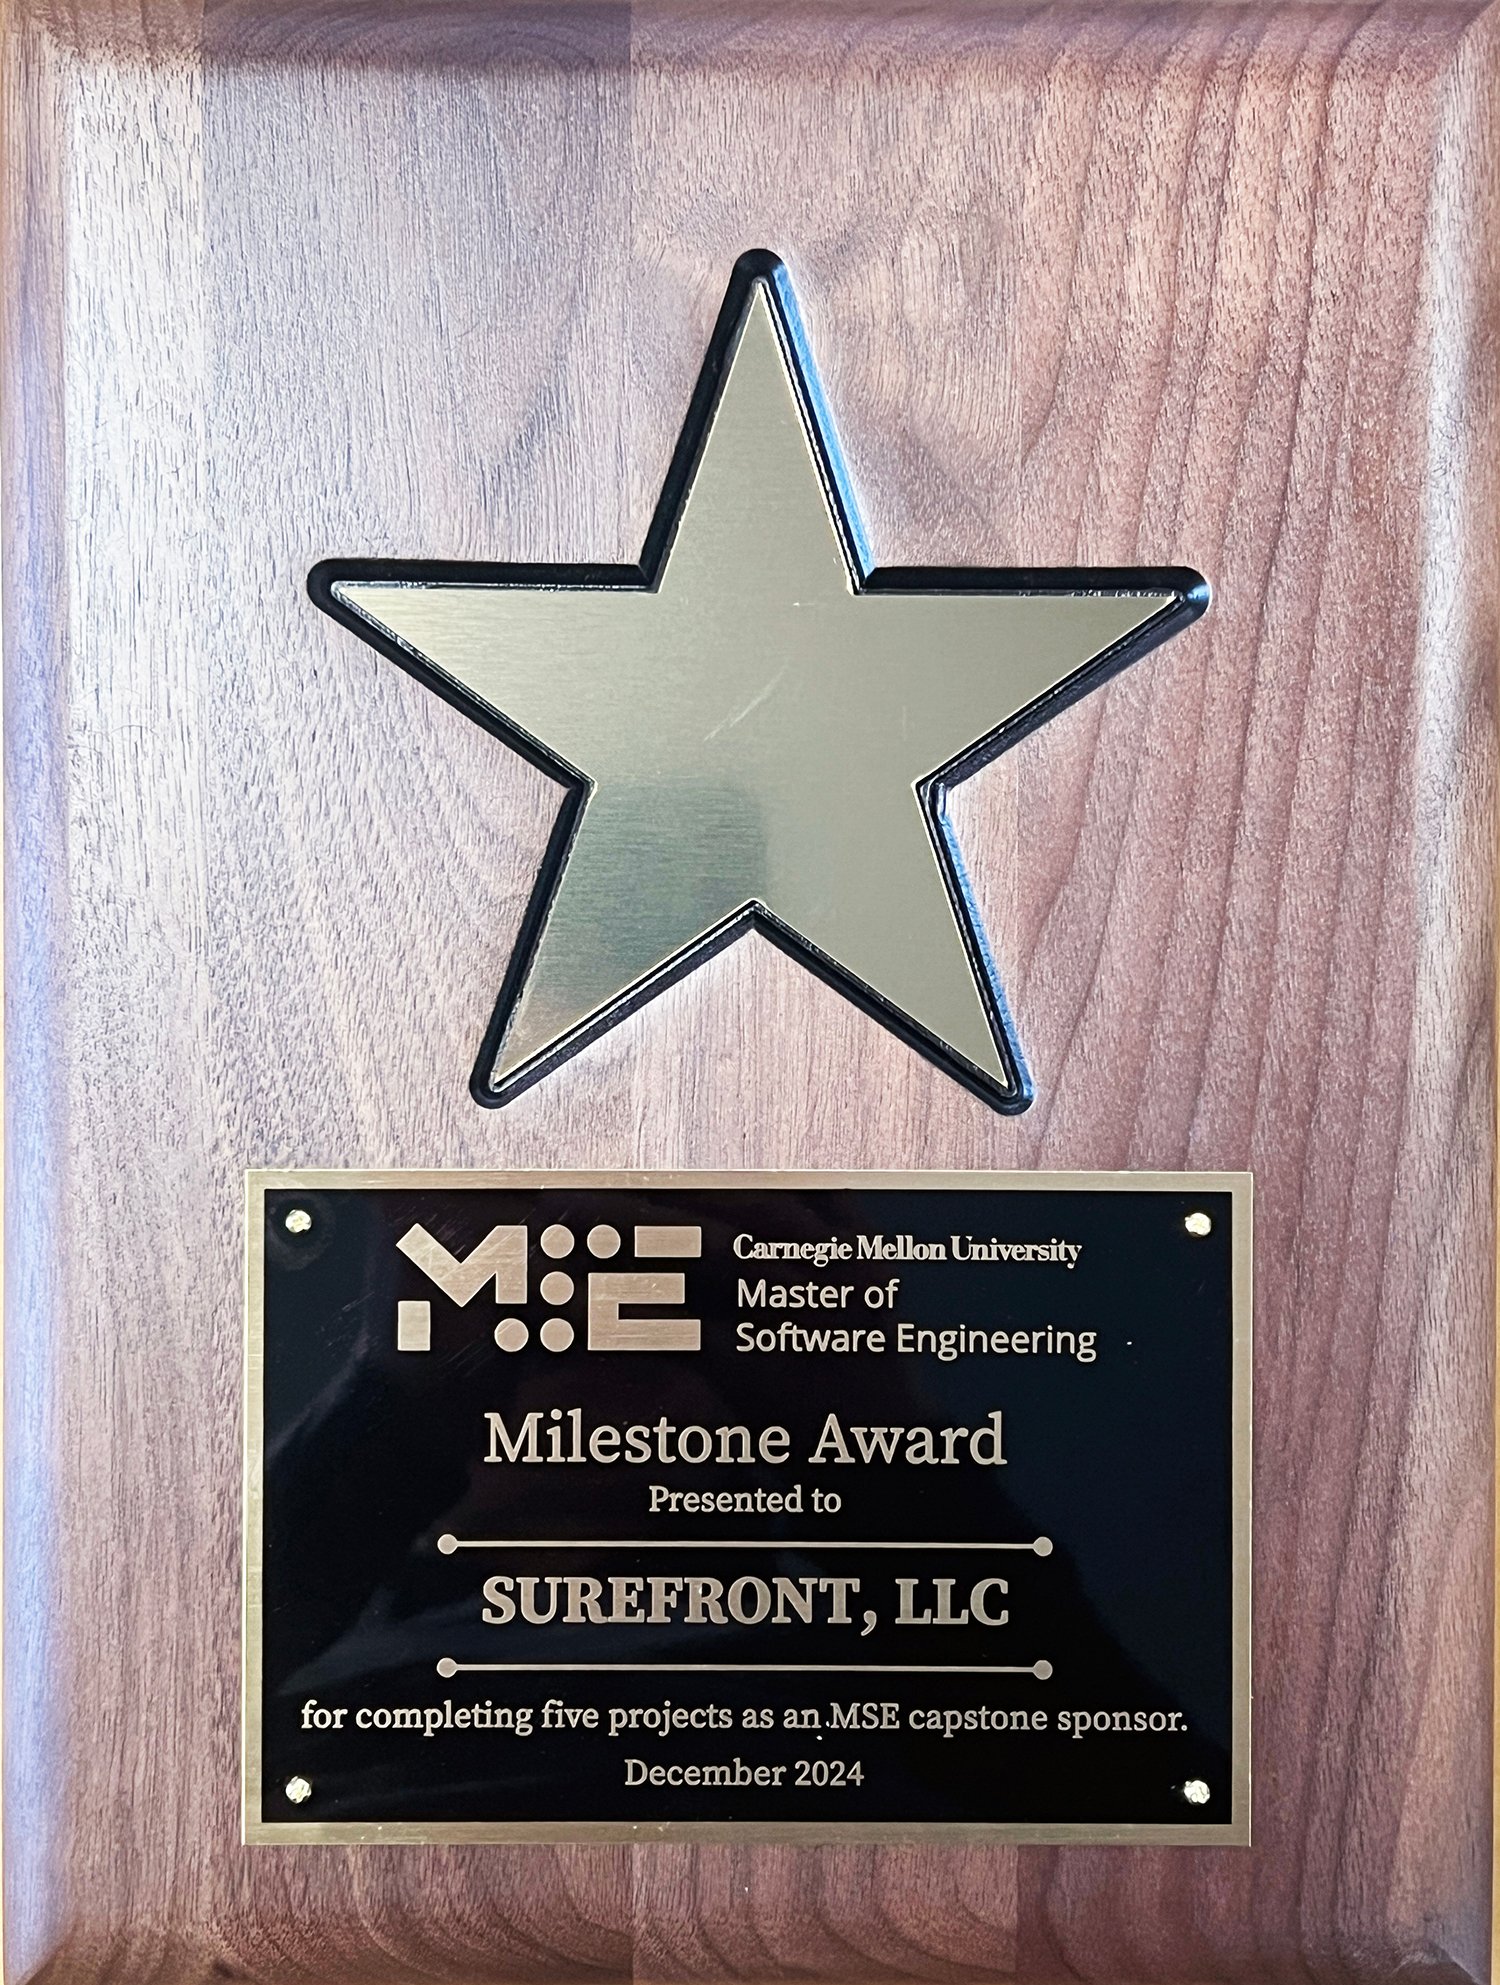 Surefront wins Milestone Awards from Carnegie Mellon University